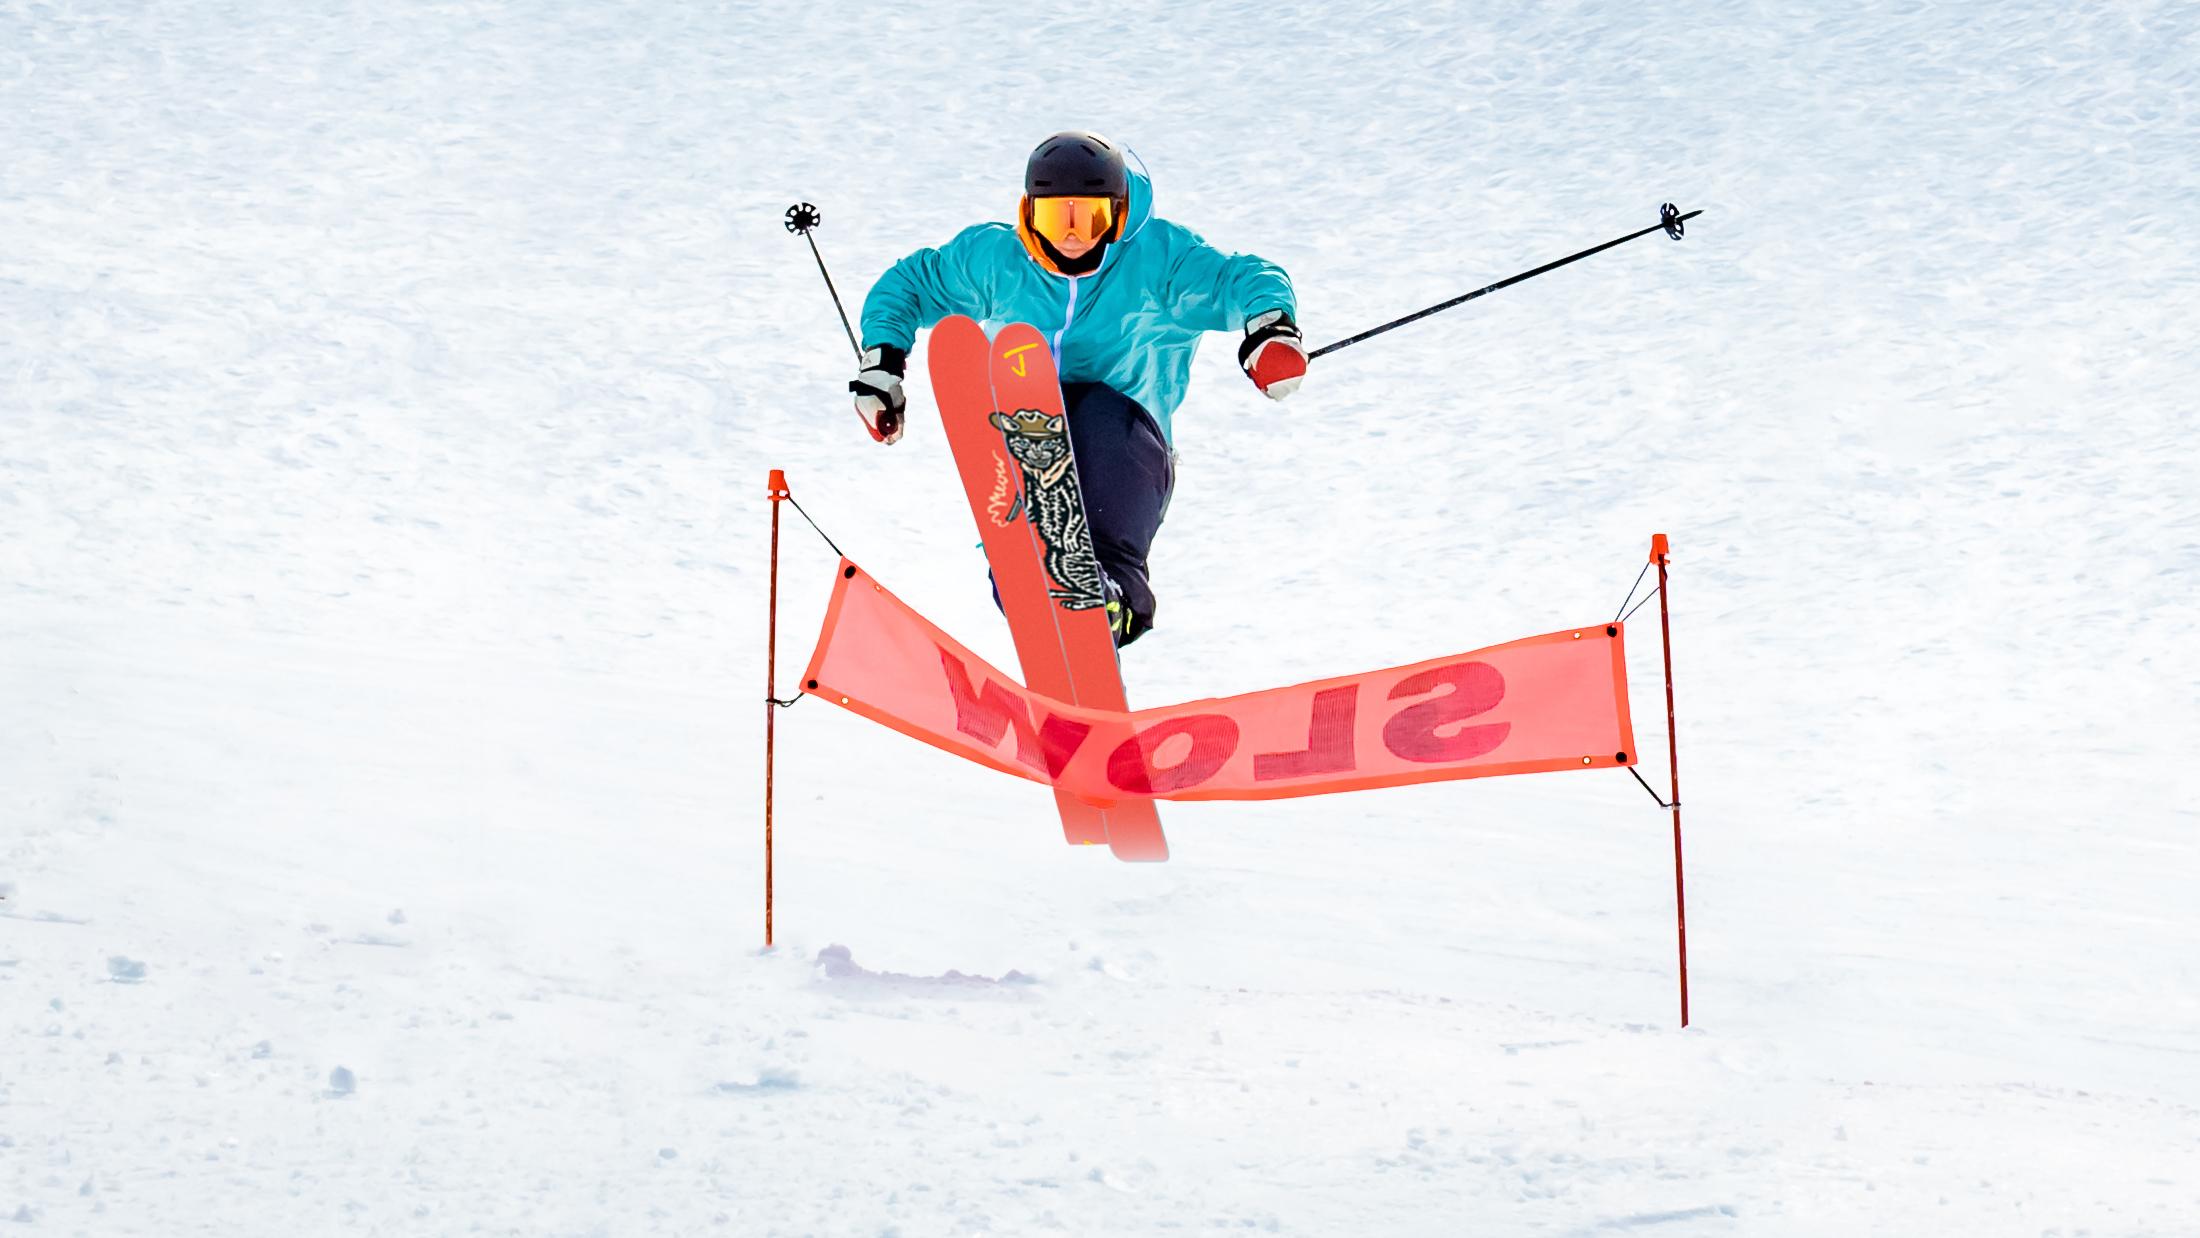 The Vacation "ROUNDUP" Sam Larson x J Collab Limited Edition Ski Shredding Image